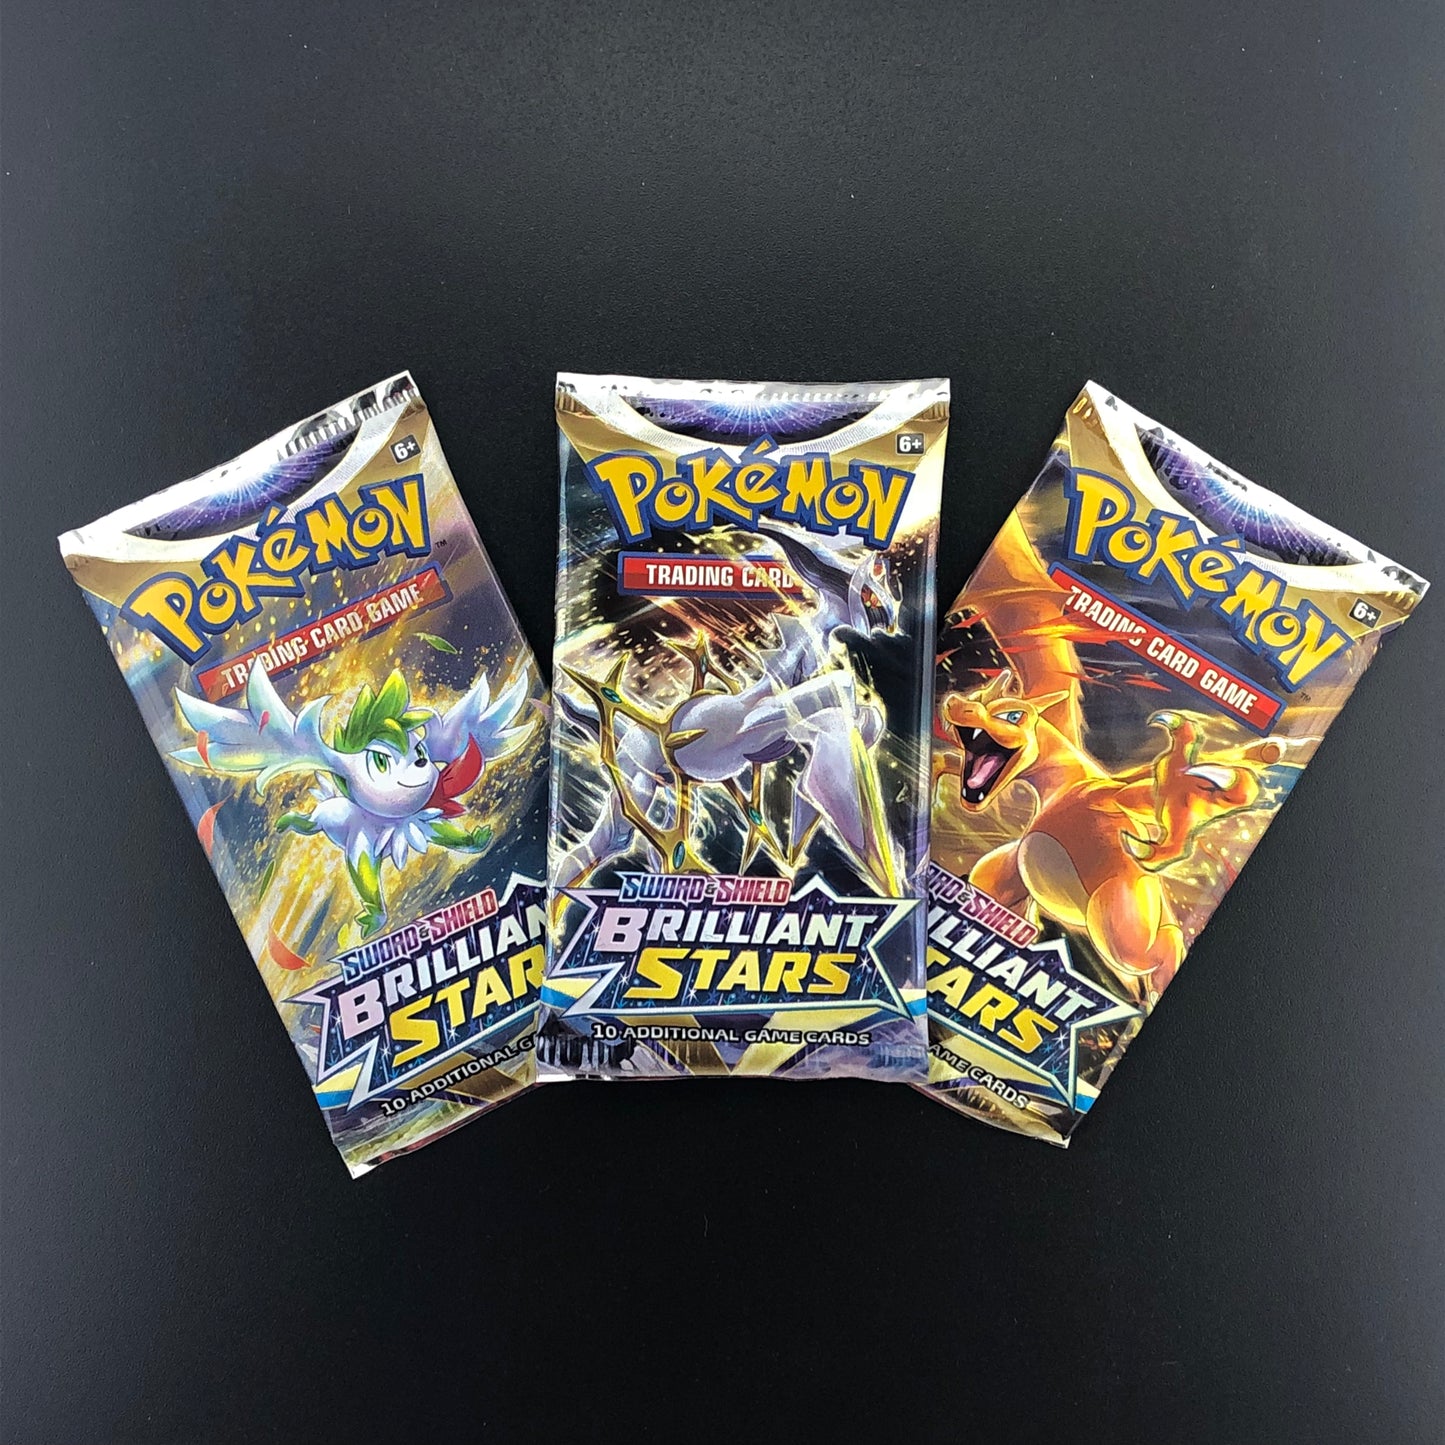 Pokémon TCG: Brilliant Stars Booster Pack: 3 Pack